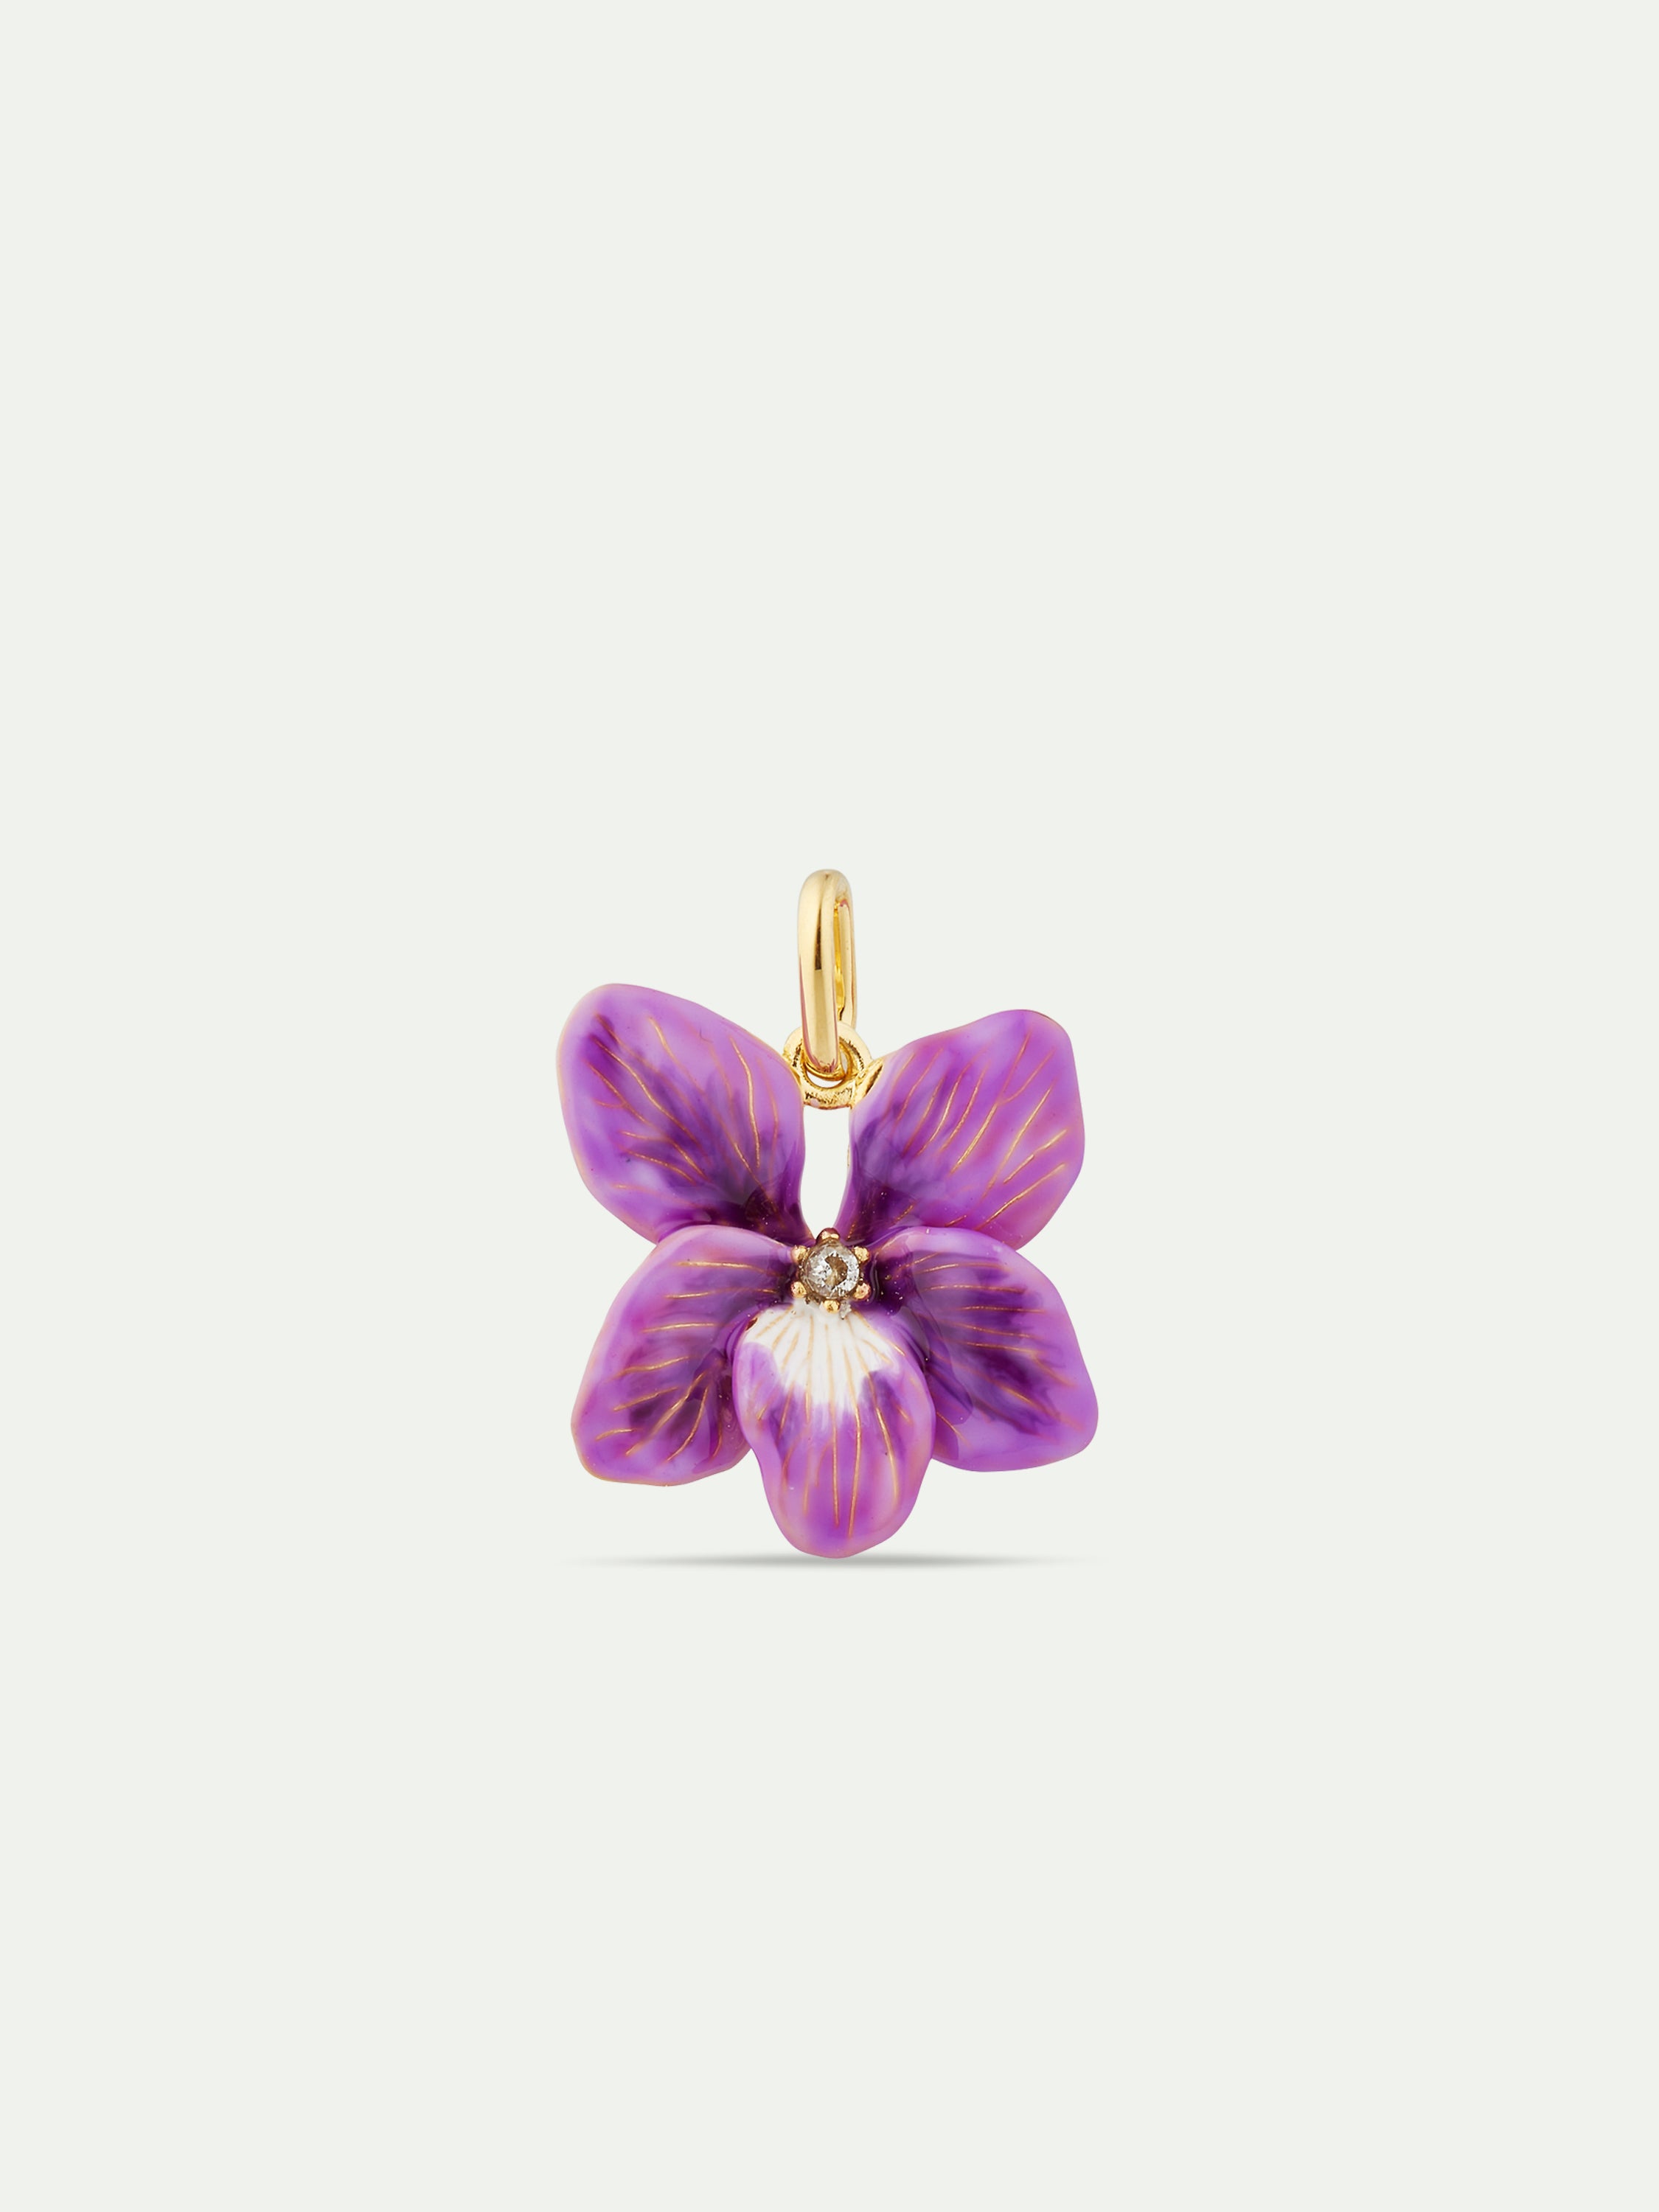 Pansy flower pendant: Spirituality and Kindness